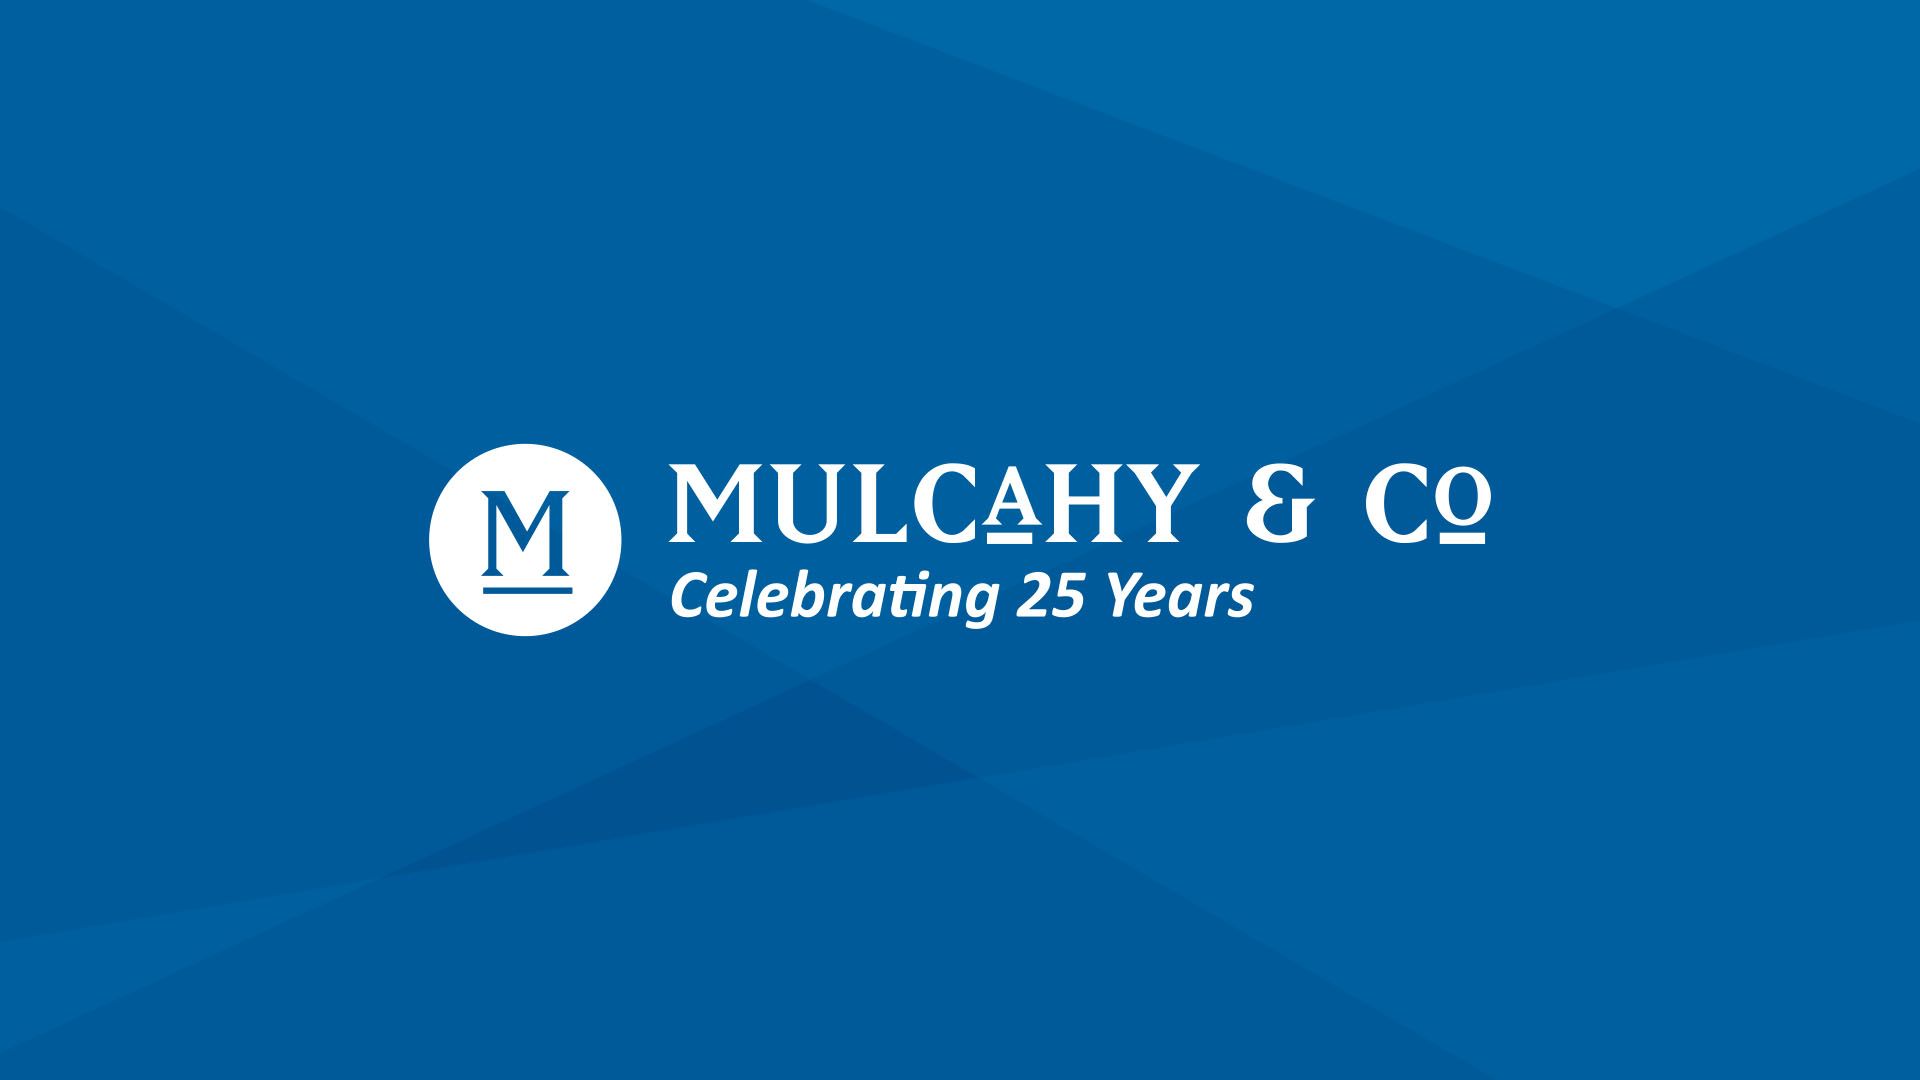 Mulcahy & Co celebrate turning 25 in 2023